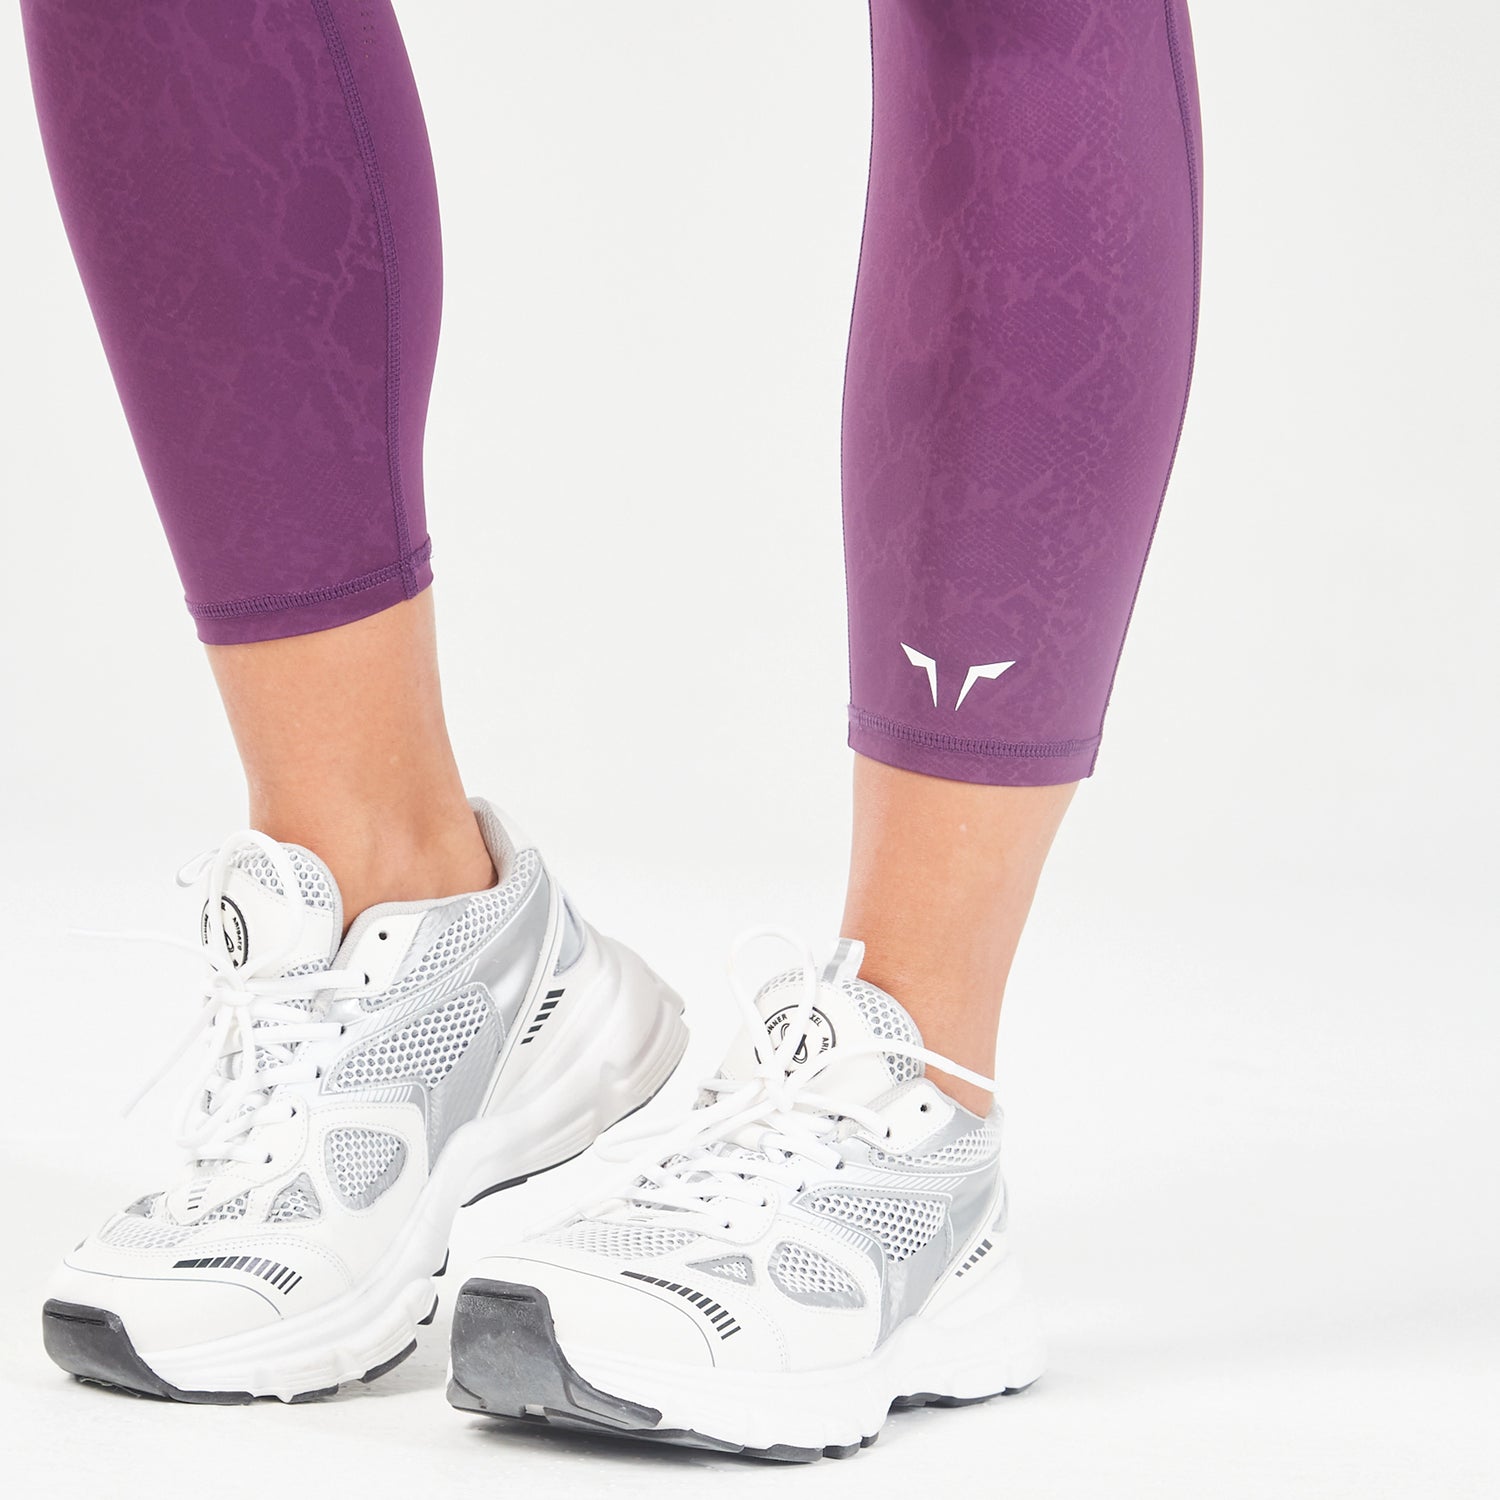 squatwolf-workout-clothes-serpent-7-8-leggings-shadow-purple-gym-leggings-for-women